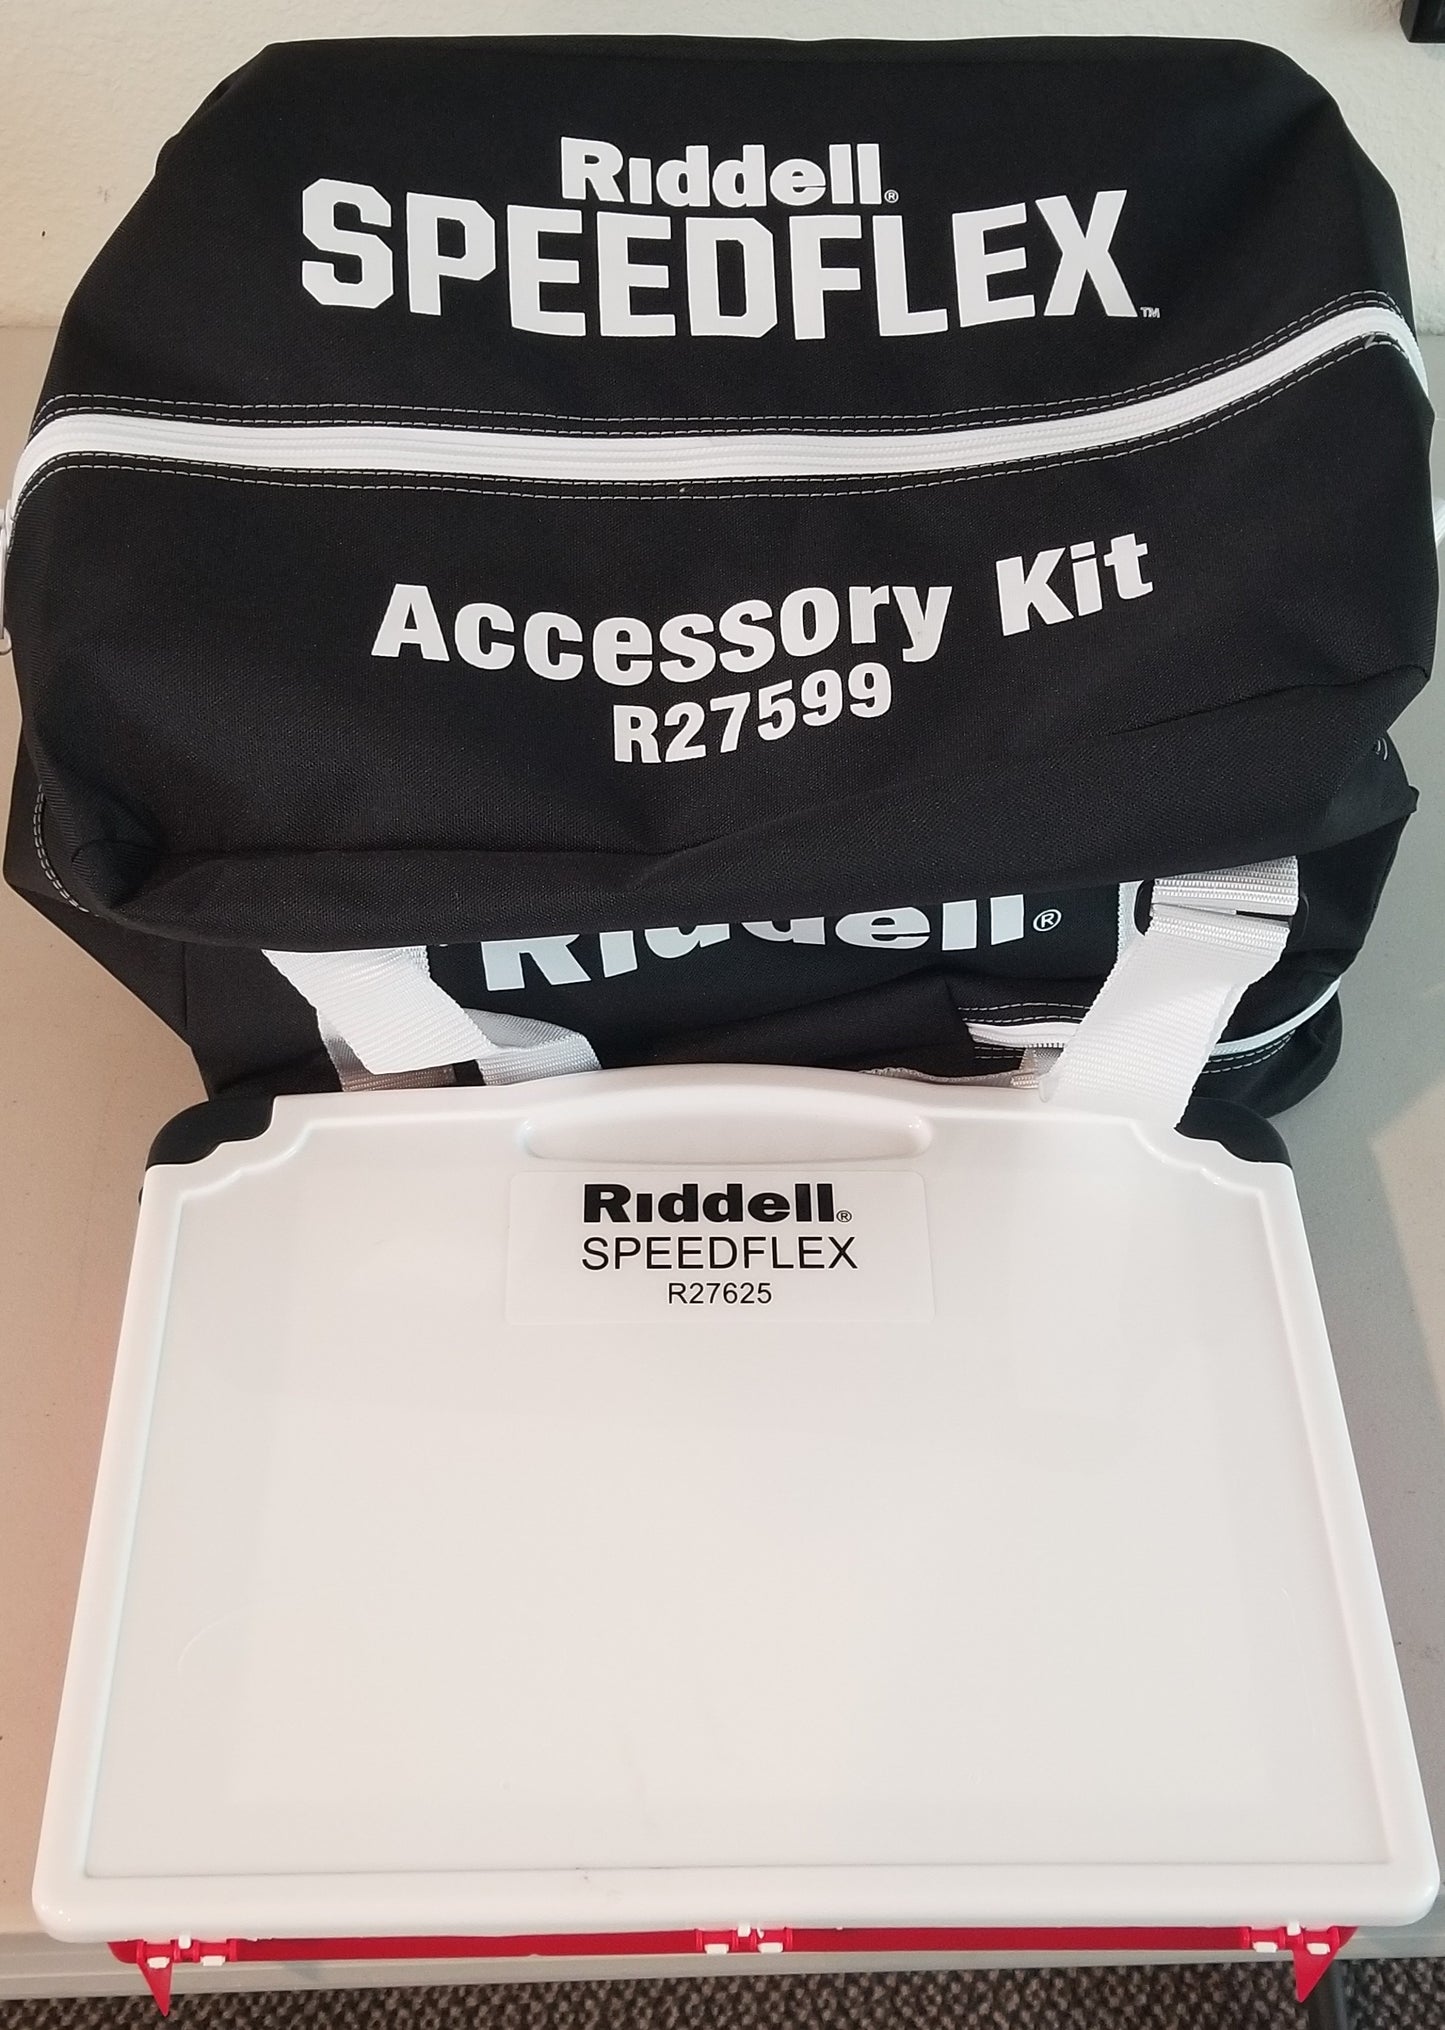 SpeedFlex Accessory Kit